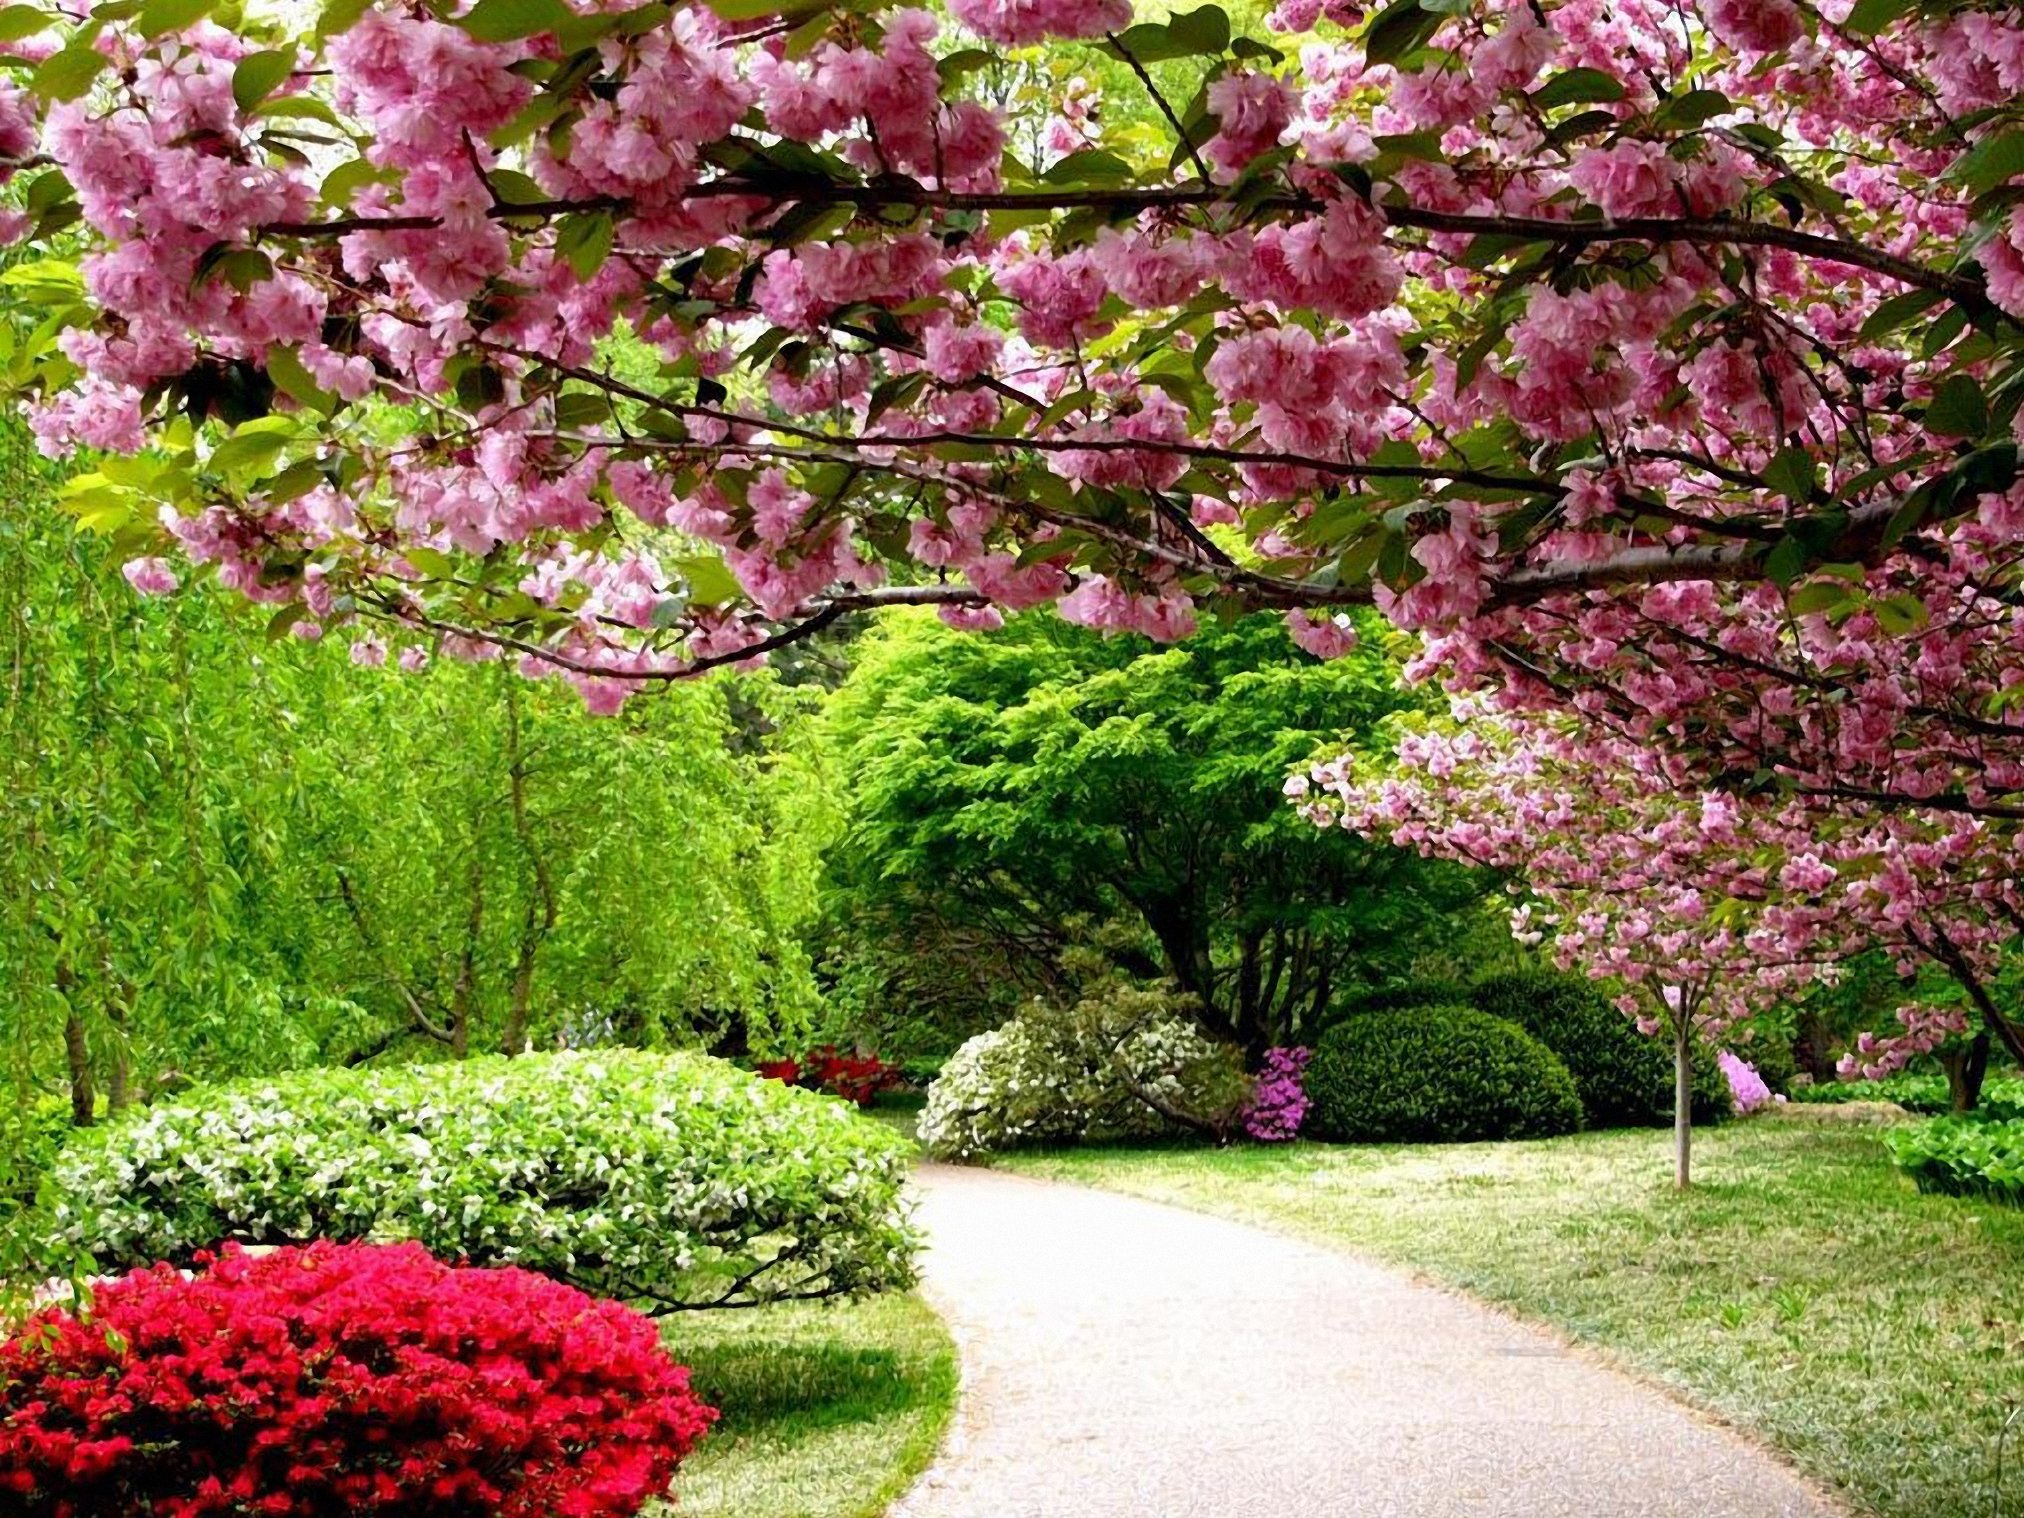 Bahor gullari. Сад Кавати Фудзи. Весенний сад (Spring Topiary Garden). Сакура гуллари. Сад с деревьями и цветами.